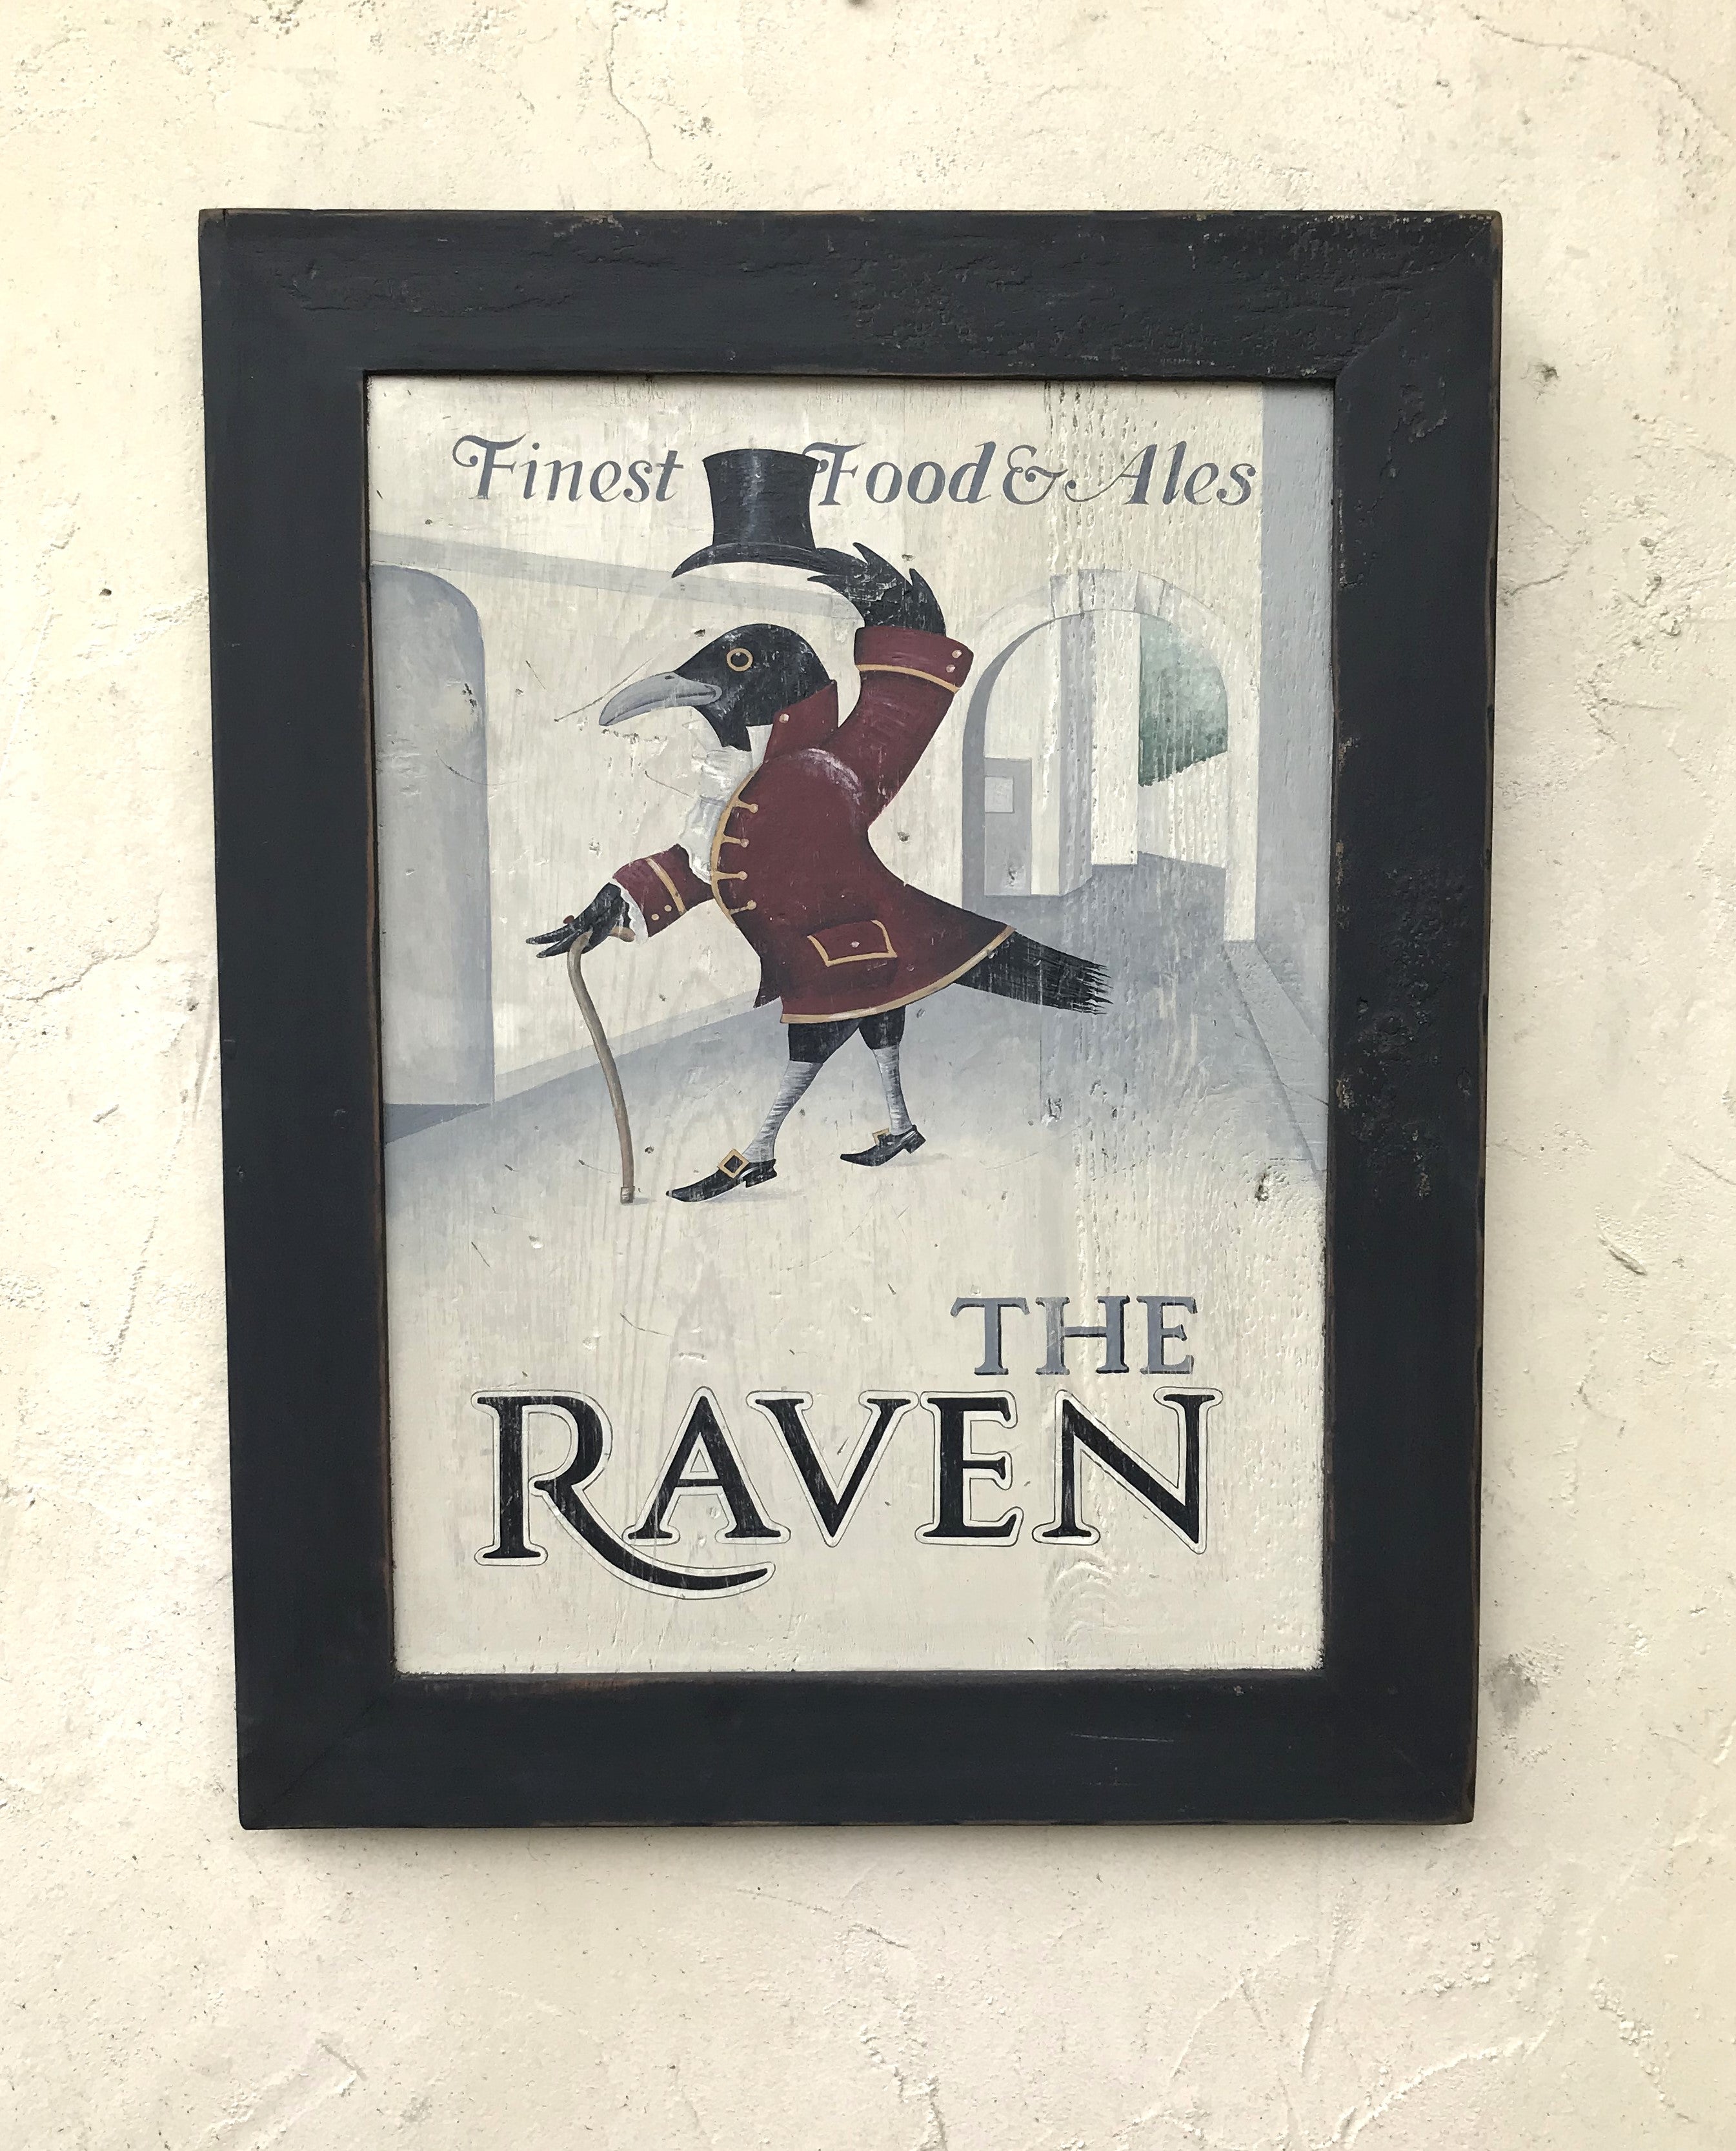 The Raven English pub sign